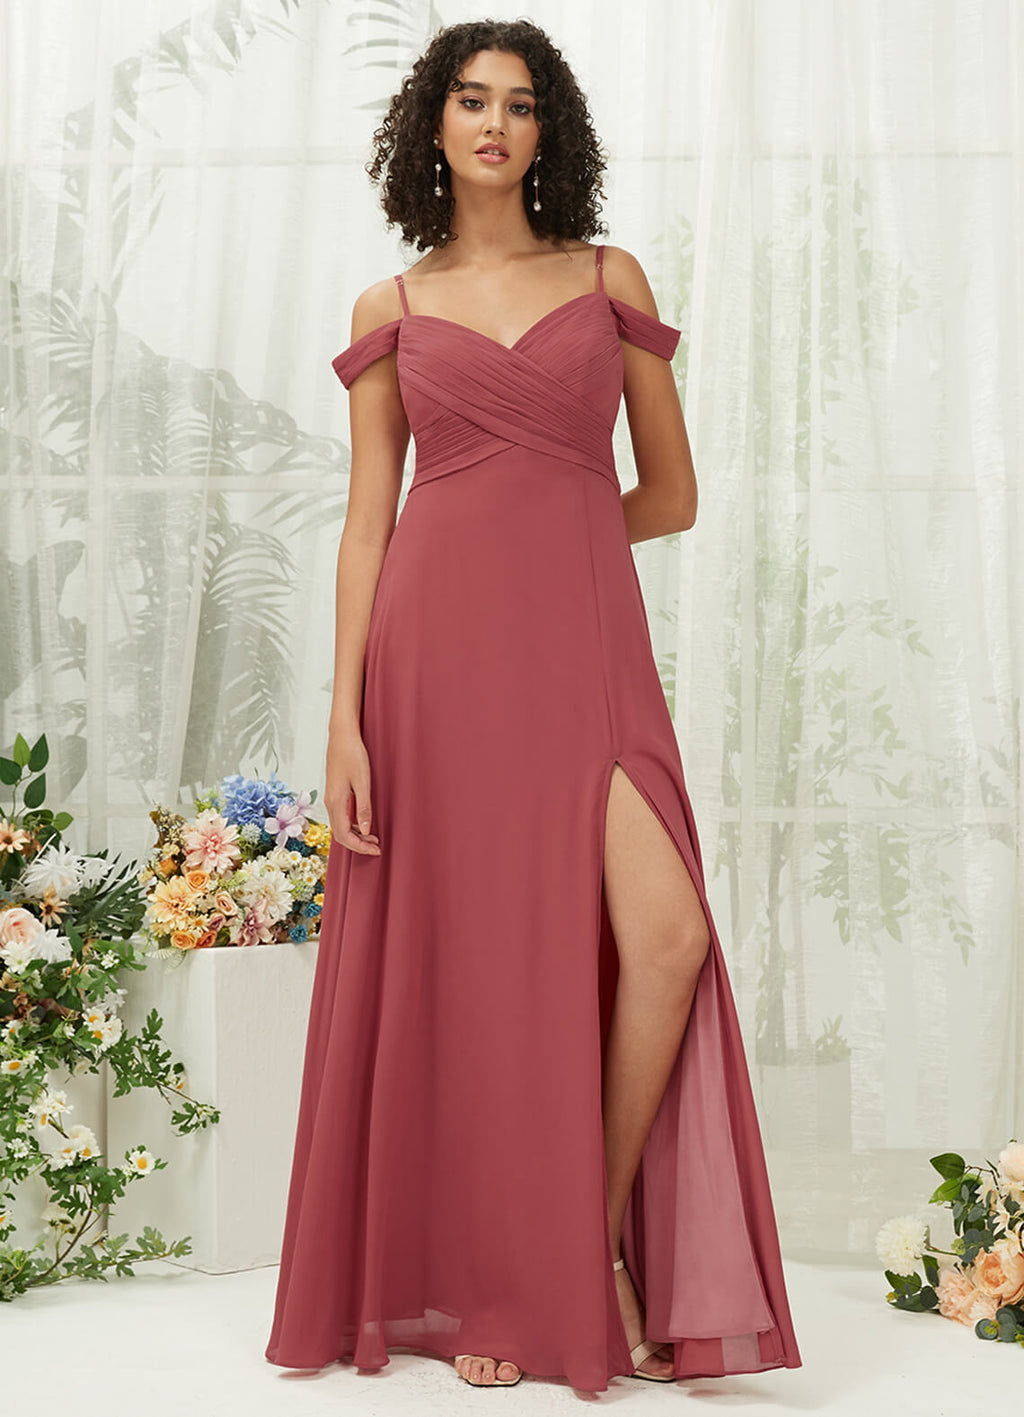 Desert Rose Chiffon Convertible Sweetheart Neckline A Line Floor Length Bridesmaid Dress Elegant Celia for Bridesmaids from NZ Bridal